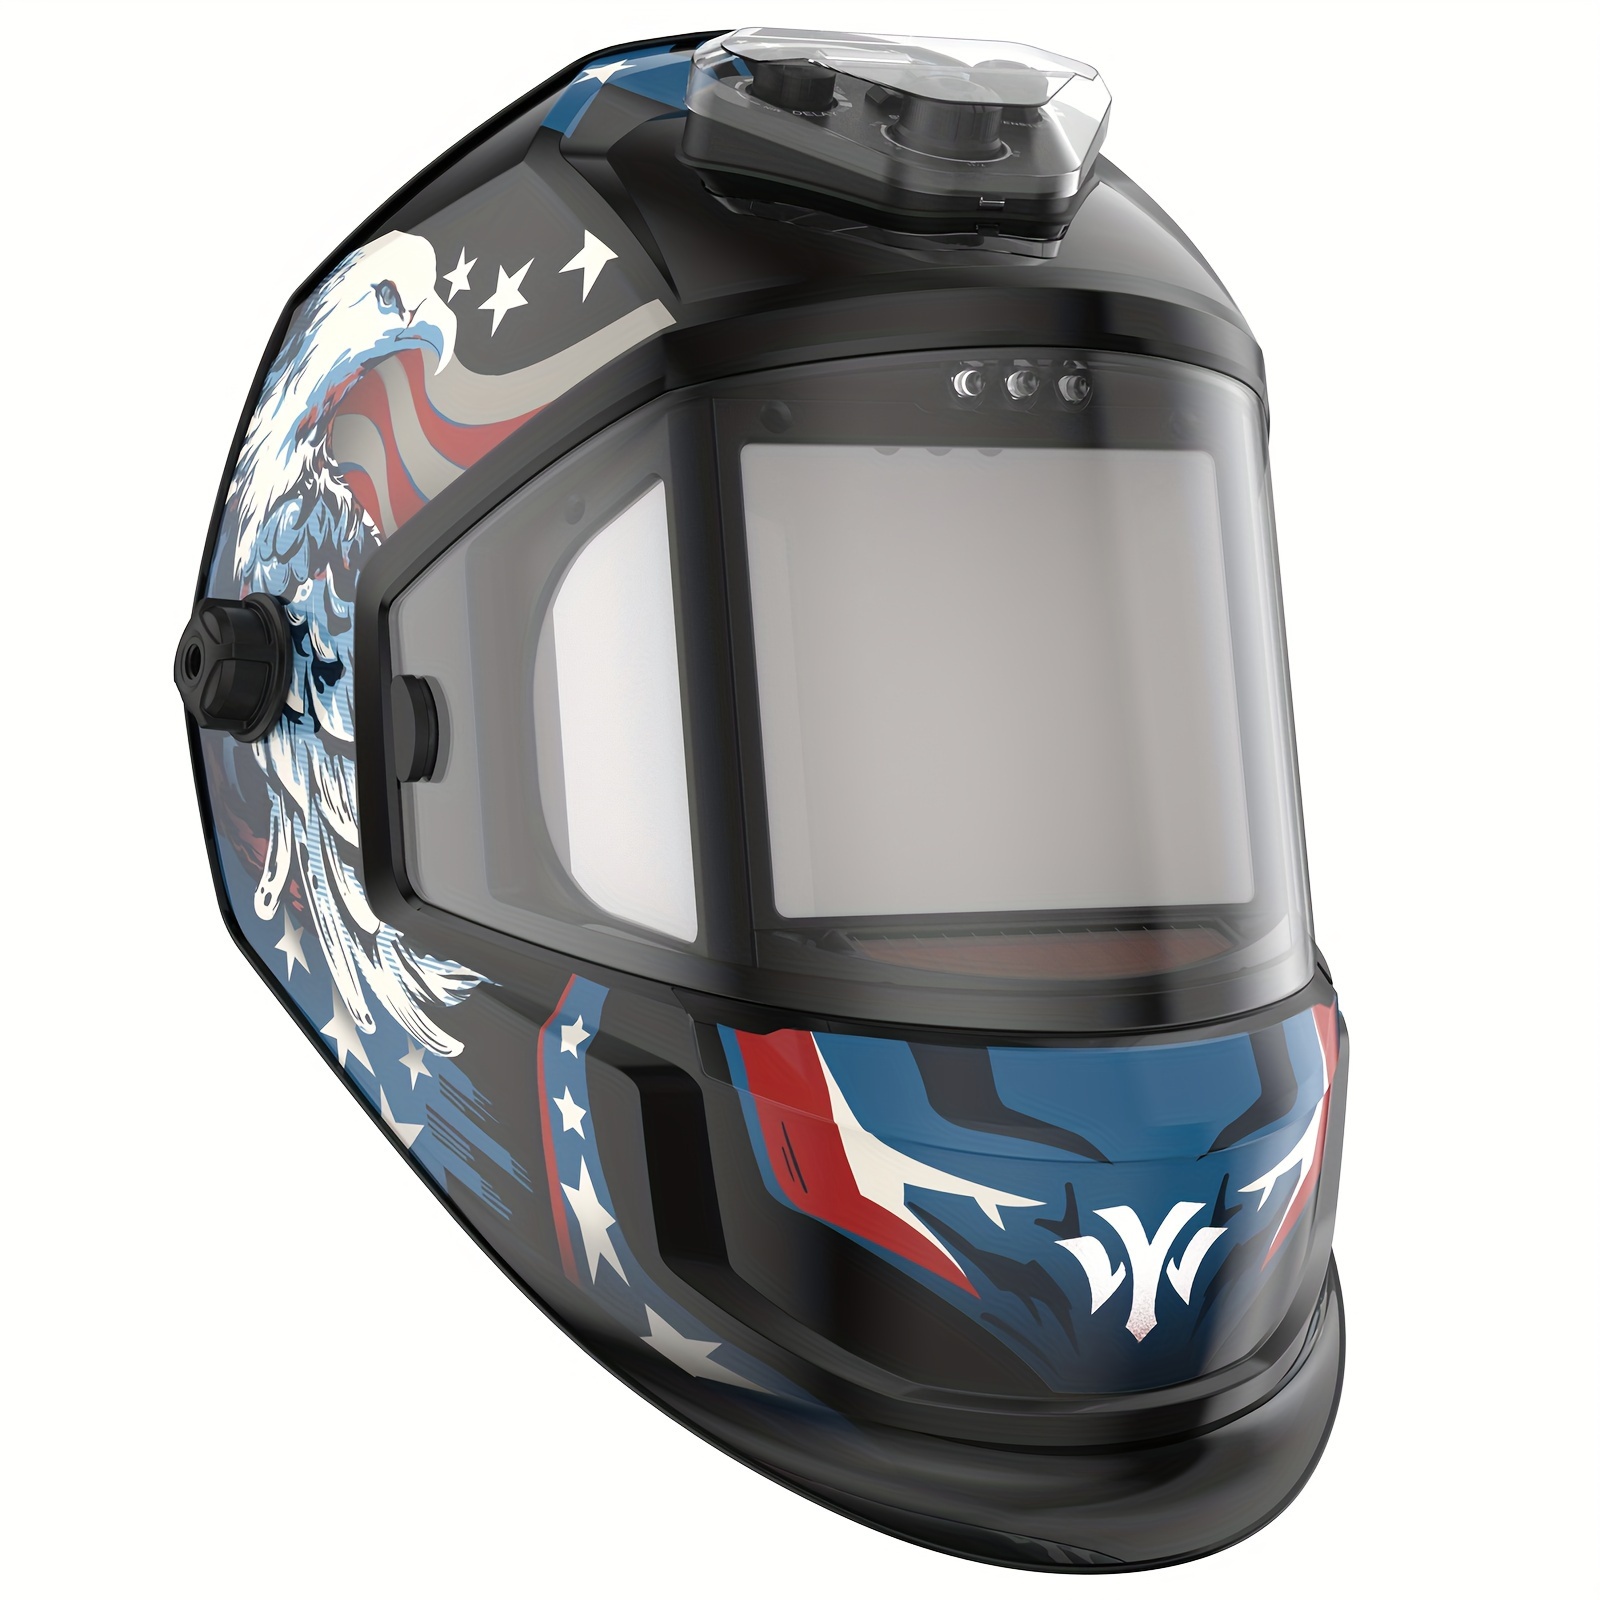 

Yeswelder Panoramic View Auto Darkening Welding Helmet, Large Viewing True Color 6 Arc Sensor Welder Mask Eagle